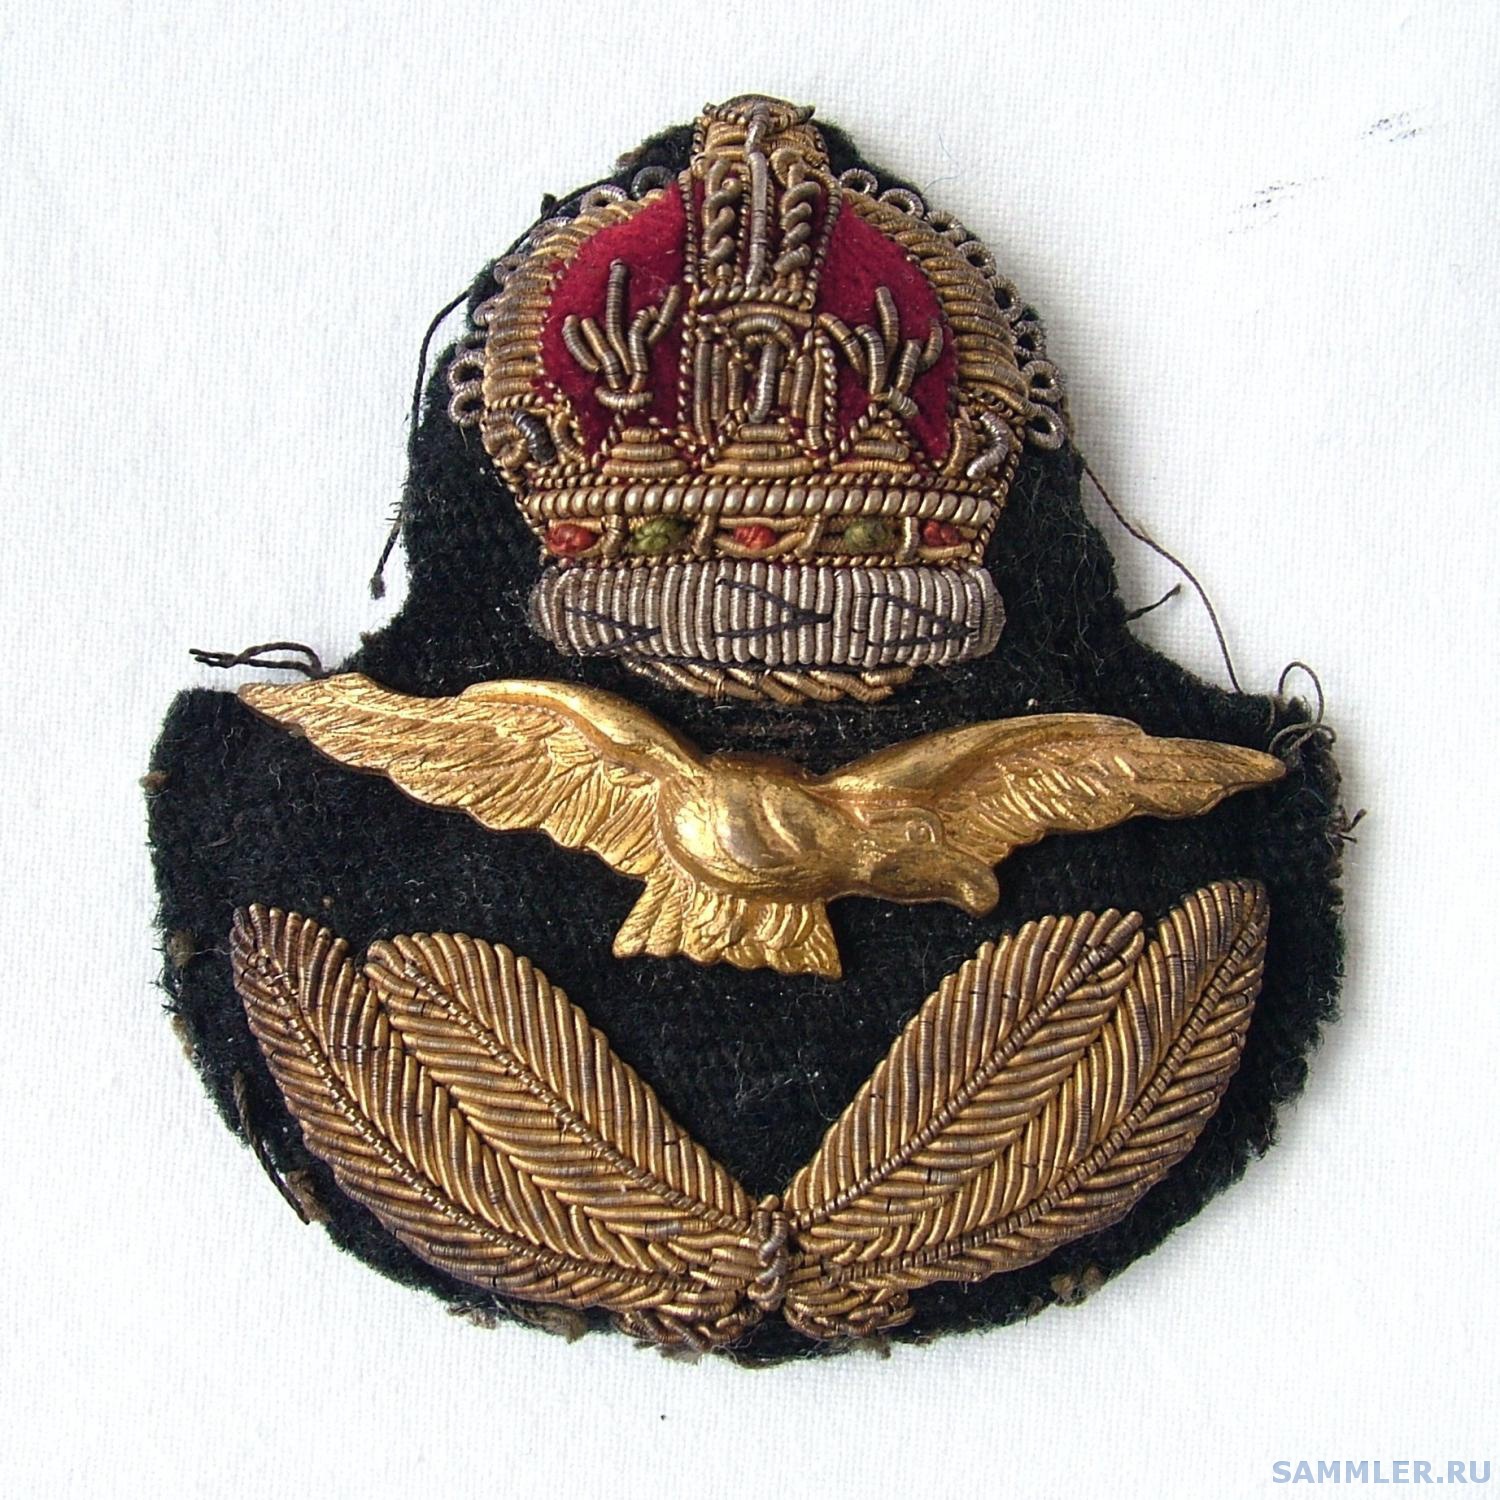 raf-officer-rank-service-dress-cap-badge_14530_main_size3.jpg